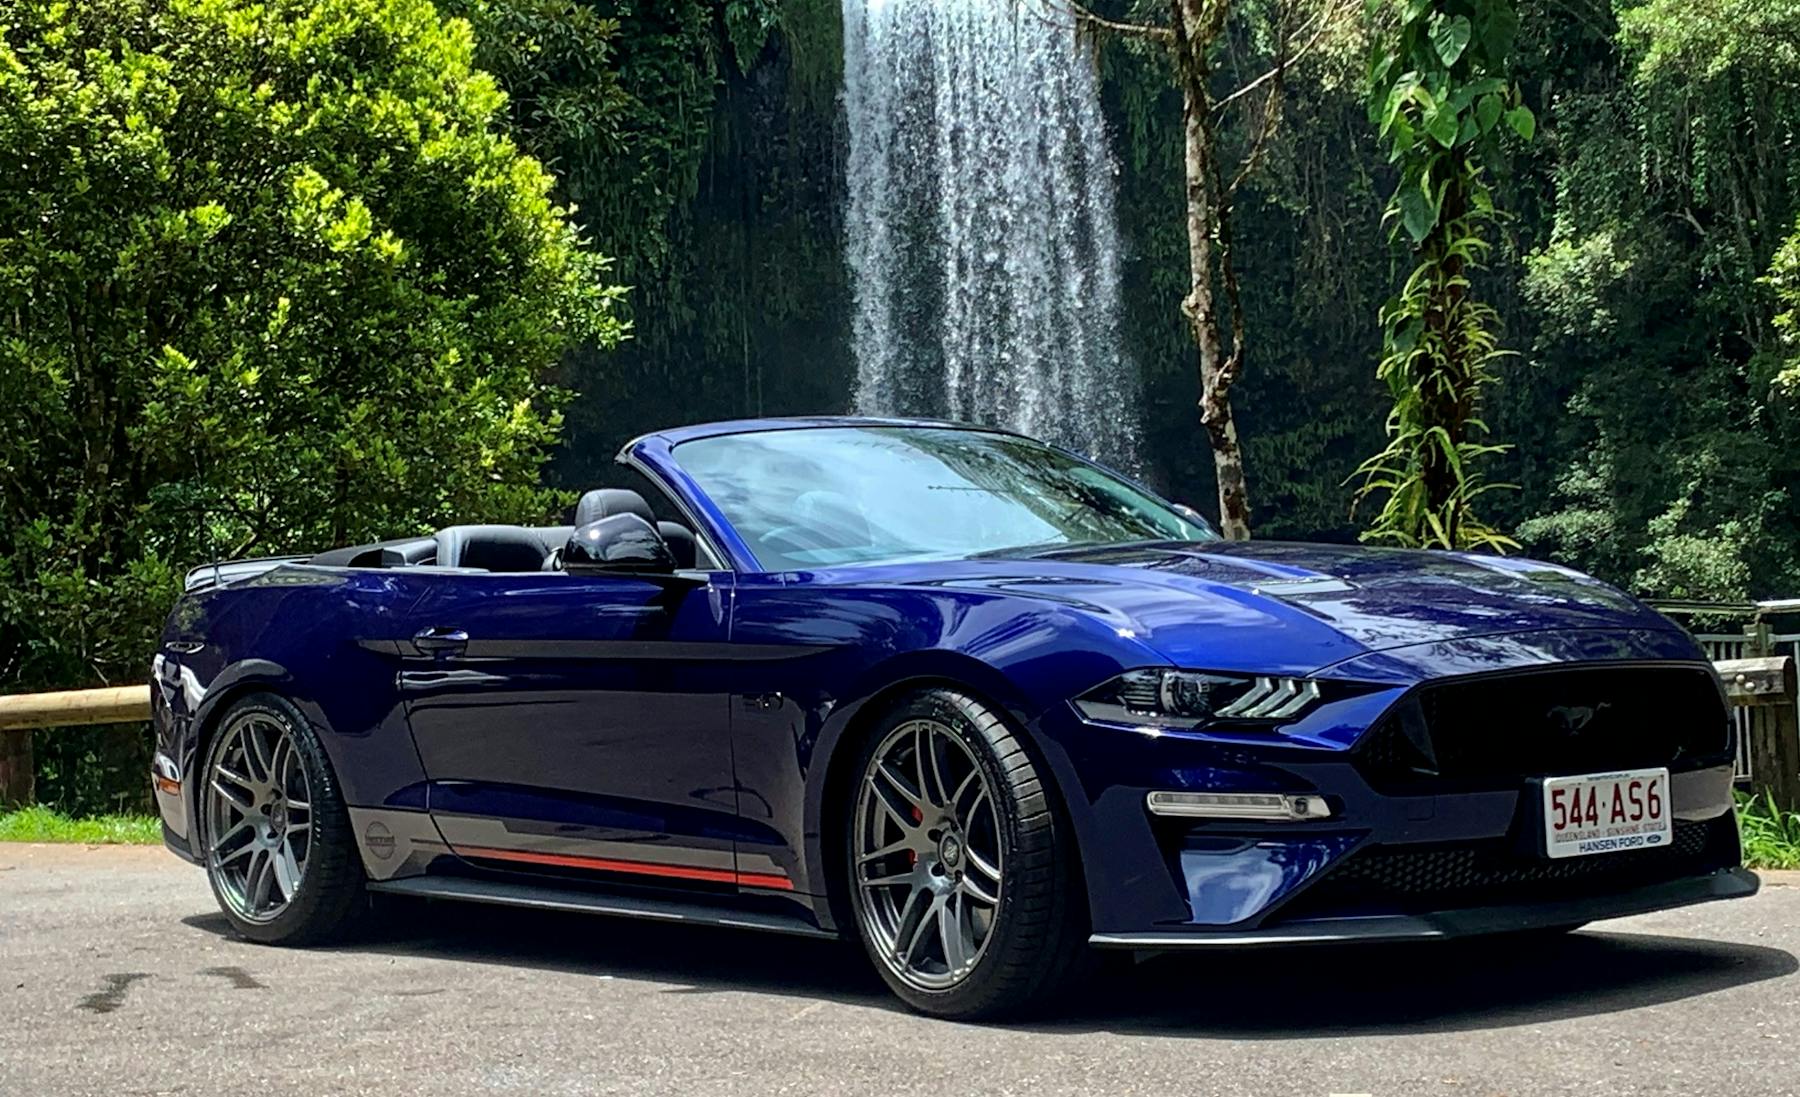 Kona Blue Mustang V8 Convertible